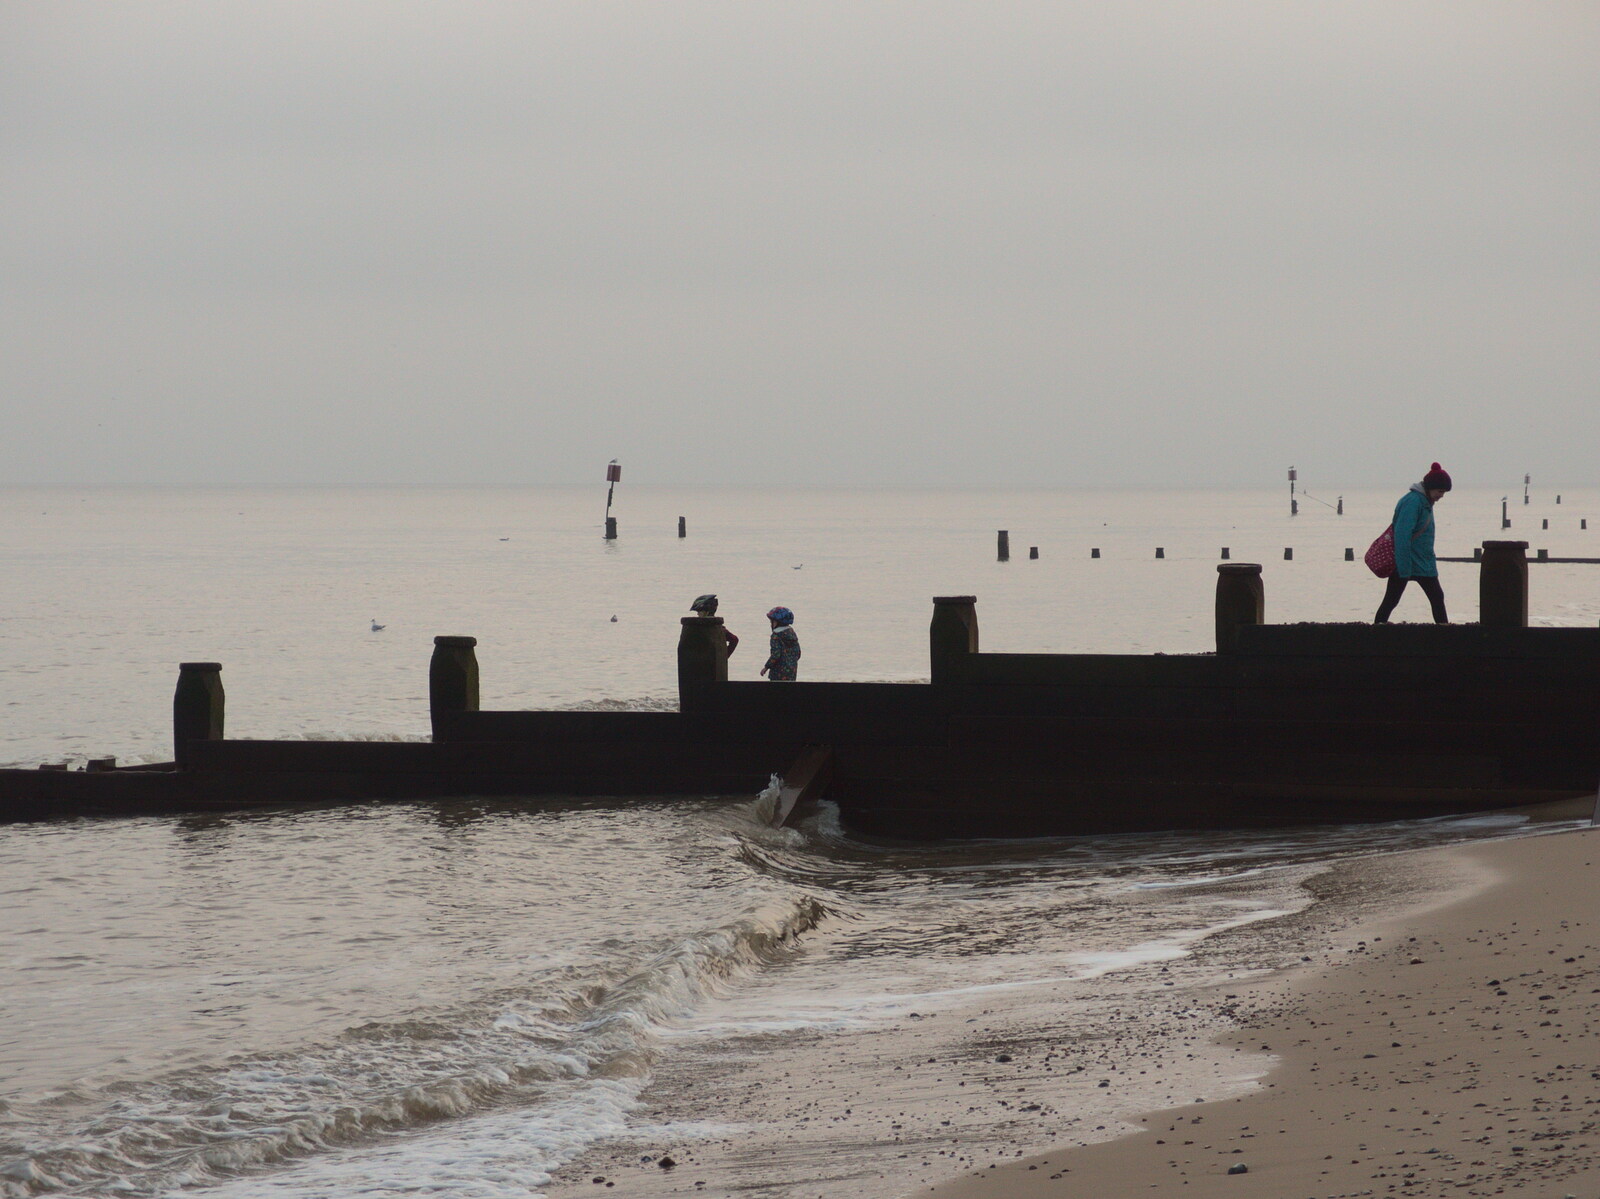 Isobel roams by the groynes from Southwold Seaside Pier, Southwold, Suffolk - 18th December 2016